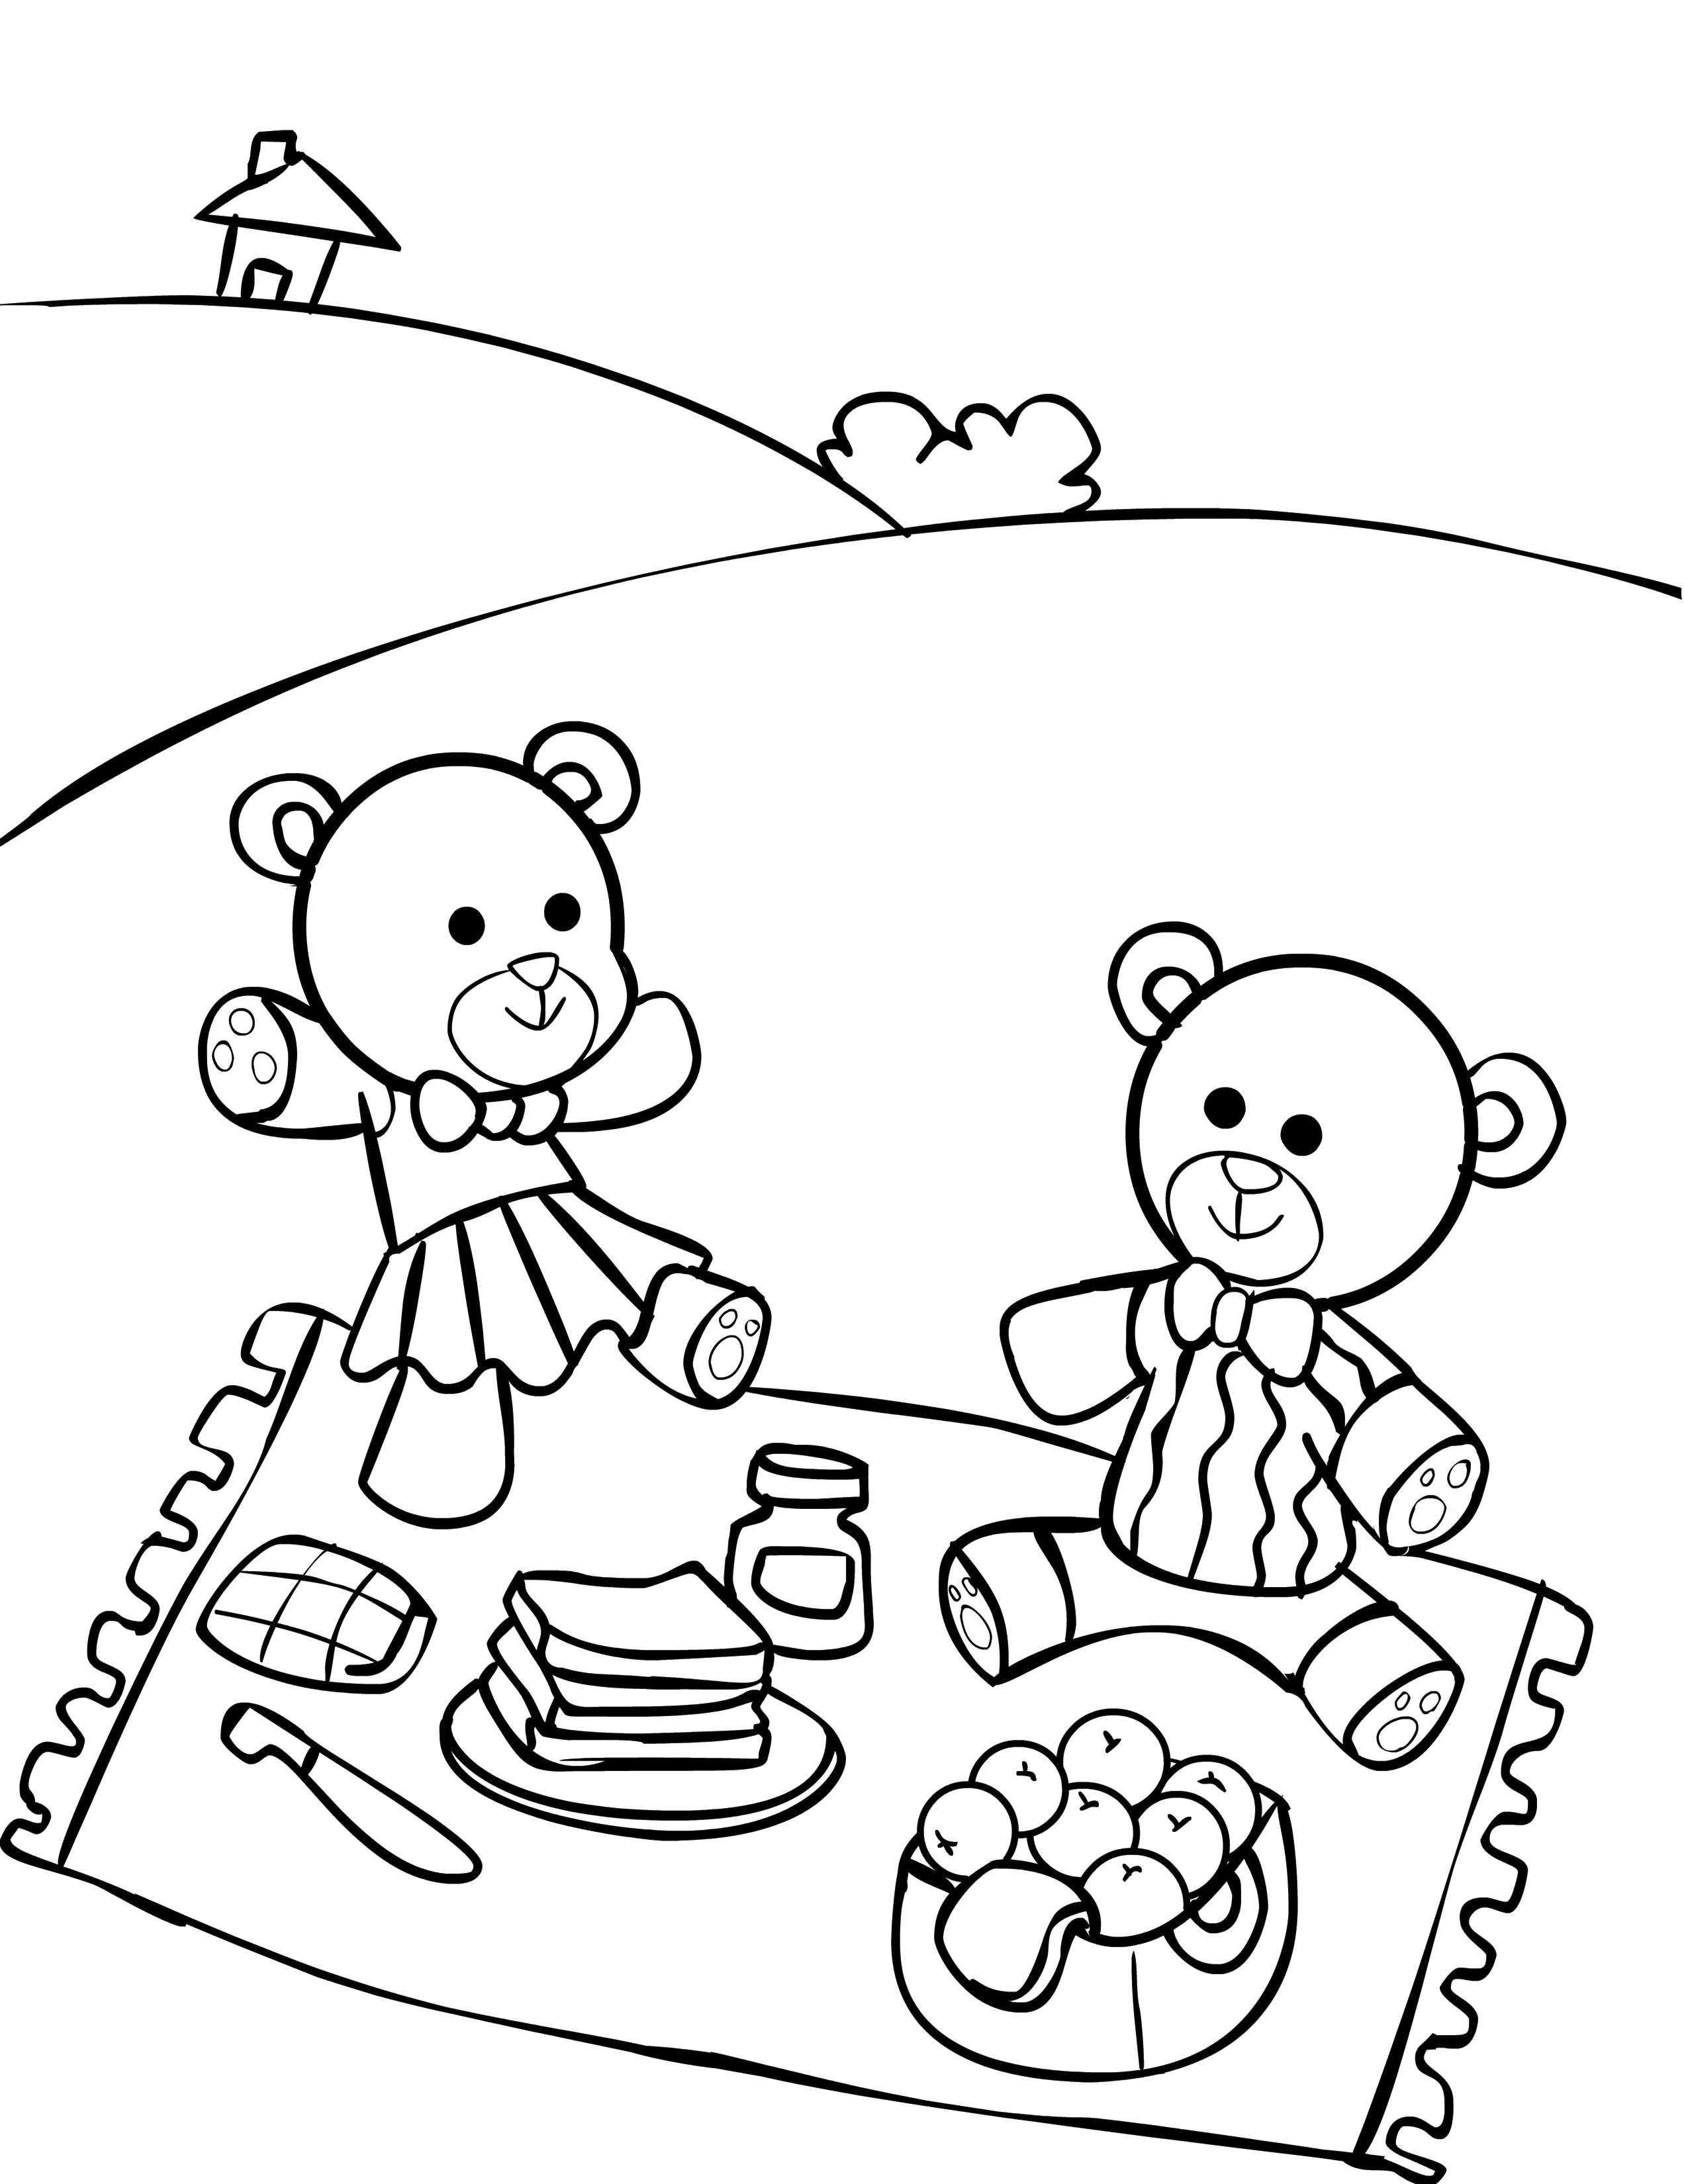 Название: Раскраска Пикник медвежат. Категория: игрушка. Теги: Игрушка, медведь.